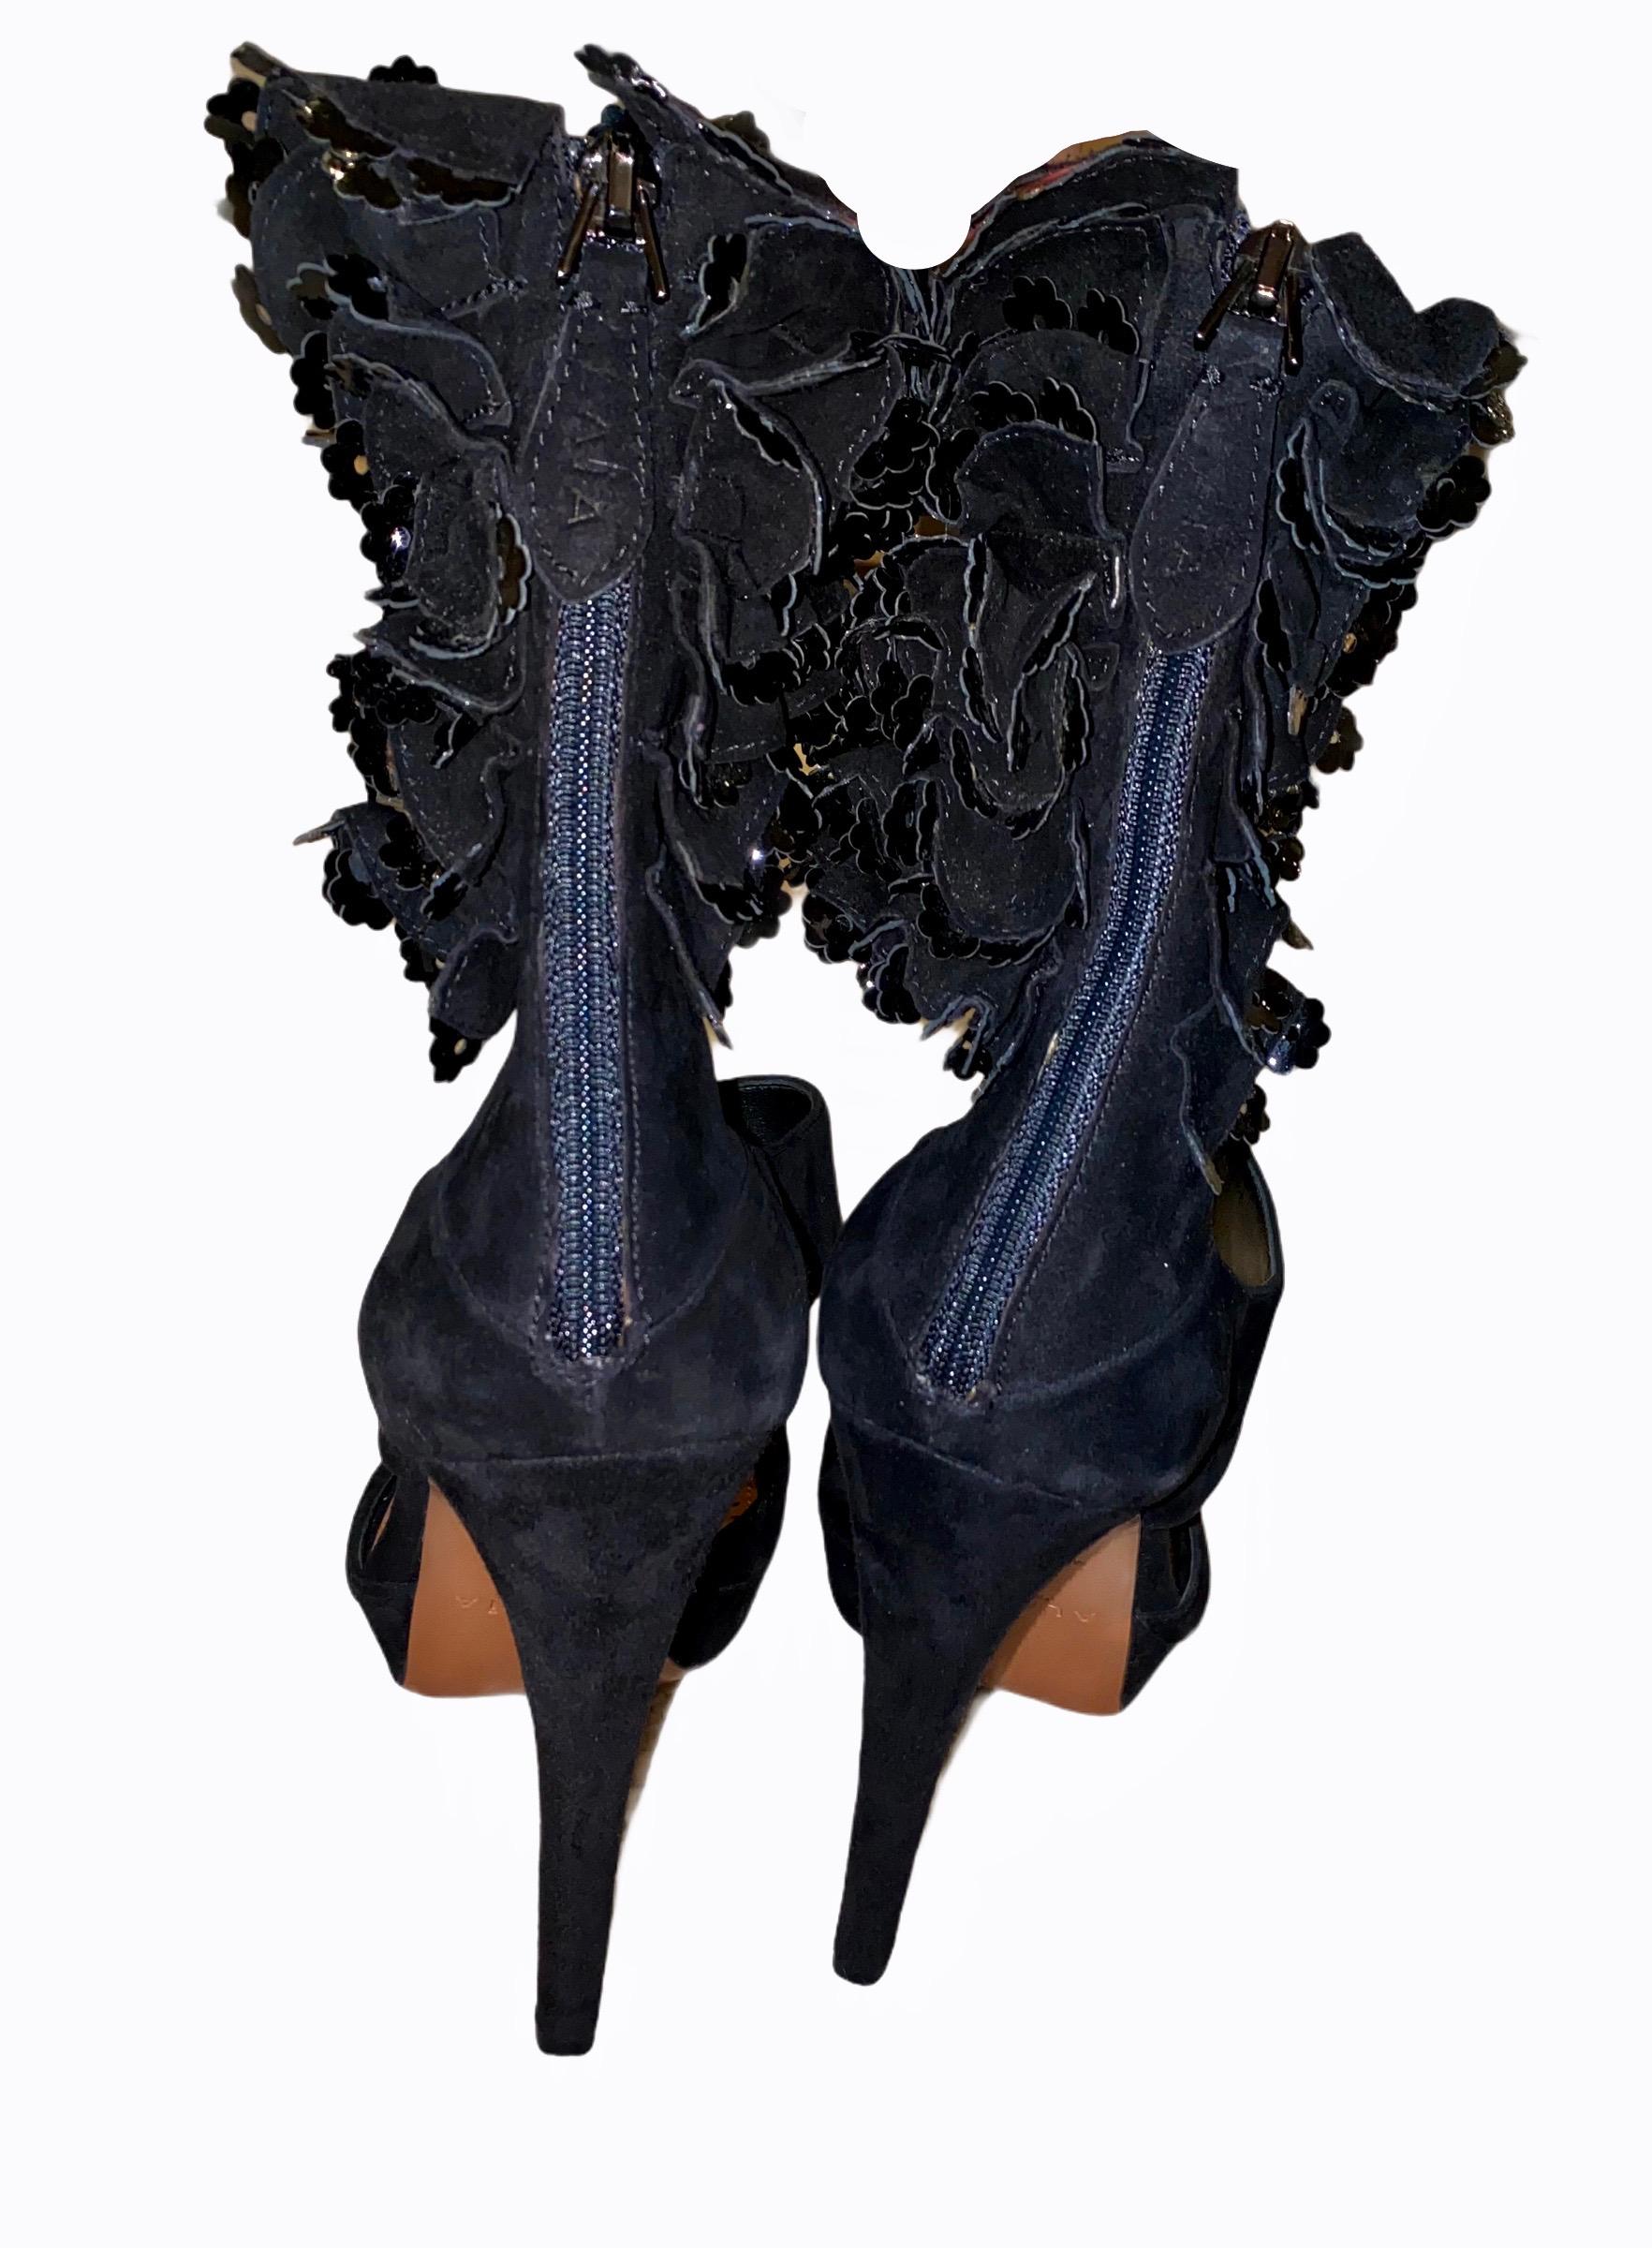 UNWORN Alaia Black Suede Ruffle Platform Ankle Sandals High Heels 38 In Good Condition For Sale In Switzerland, CH